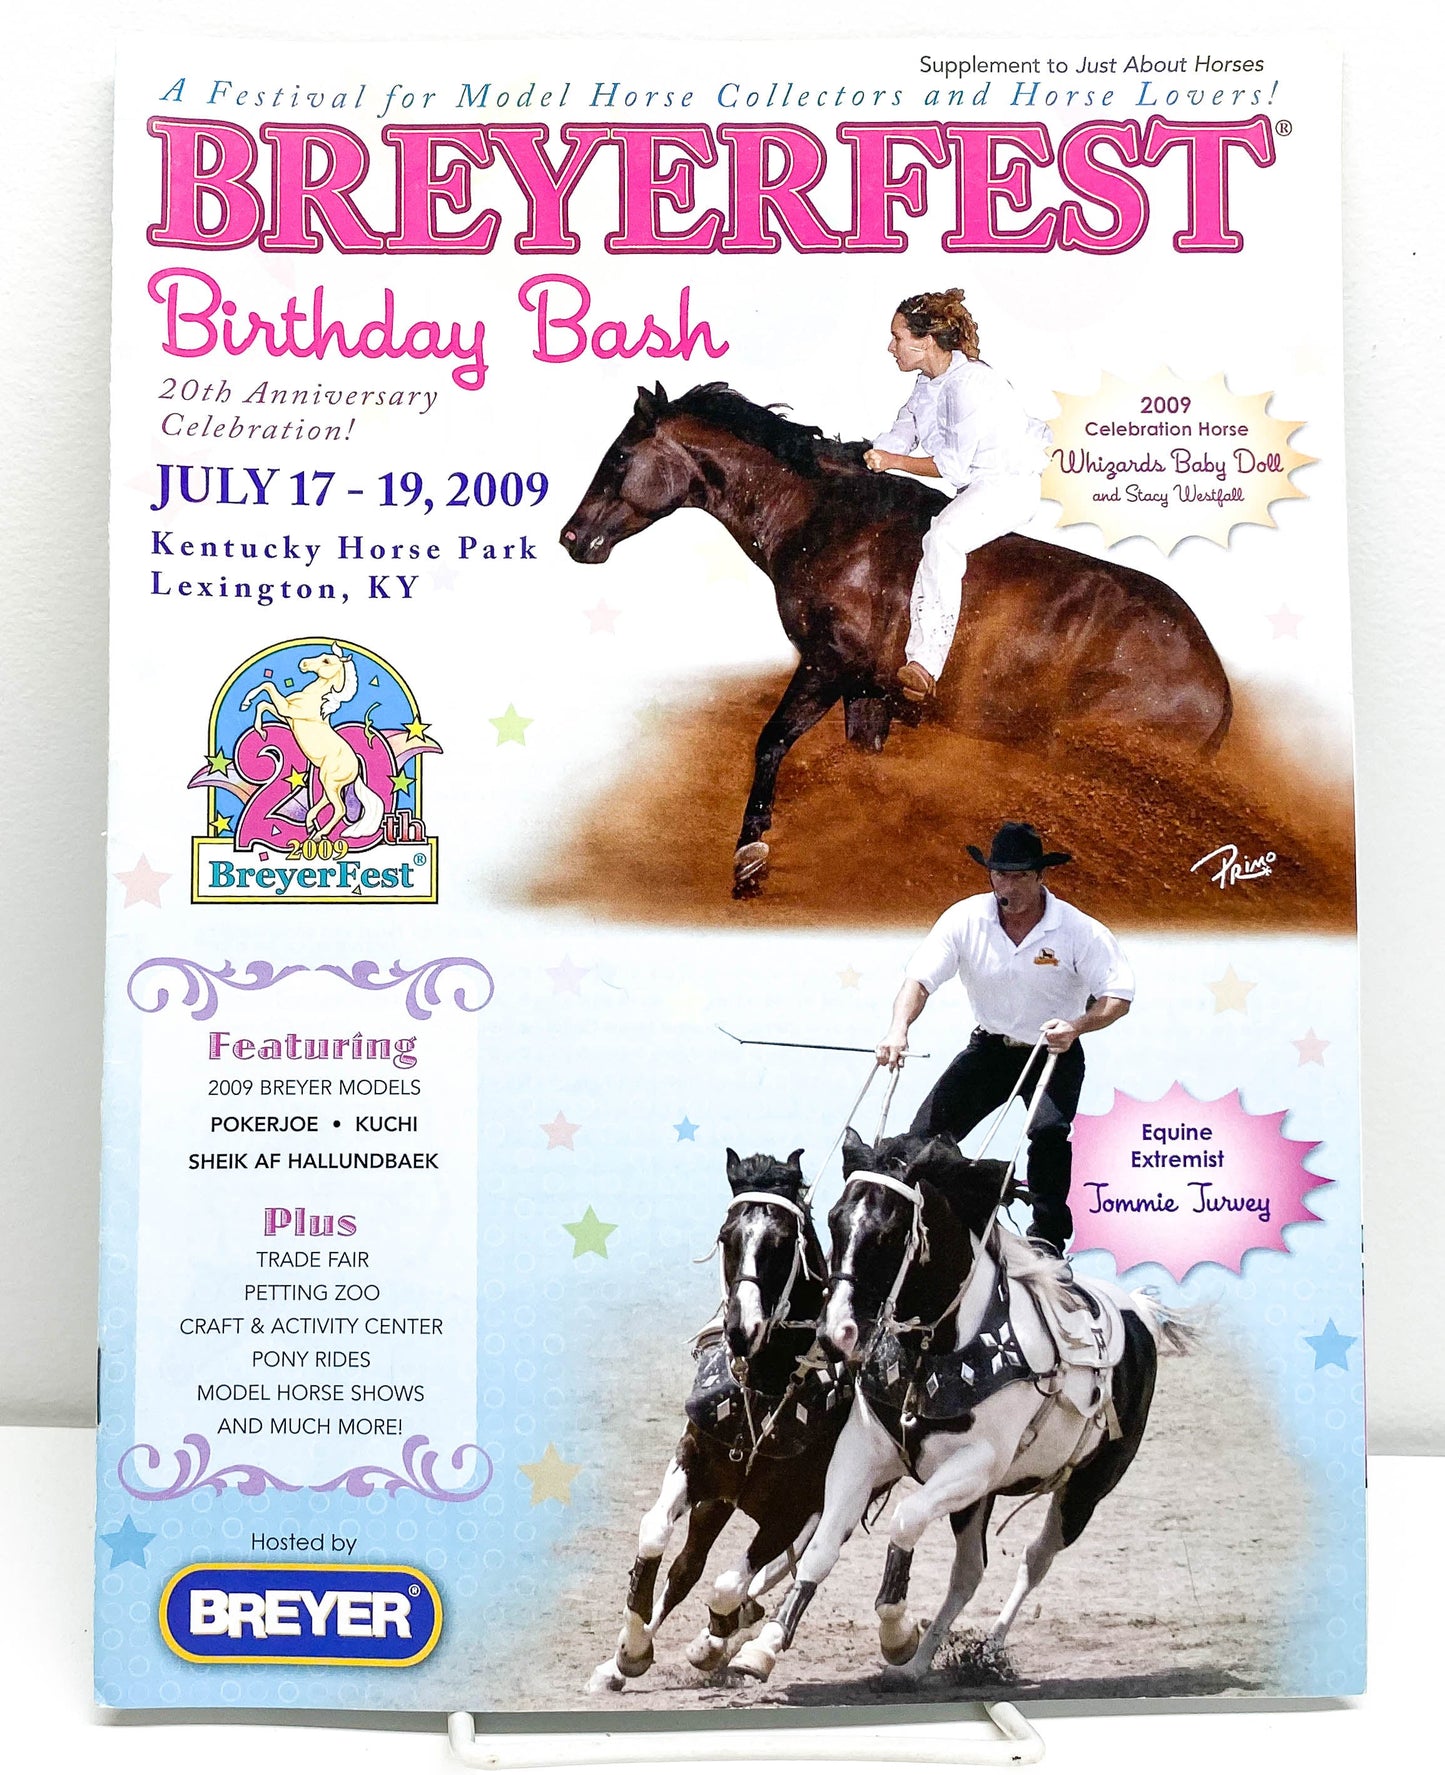 2009 Breyerfest JAH Supplement - "Birthday Bash"